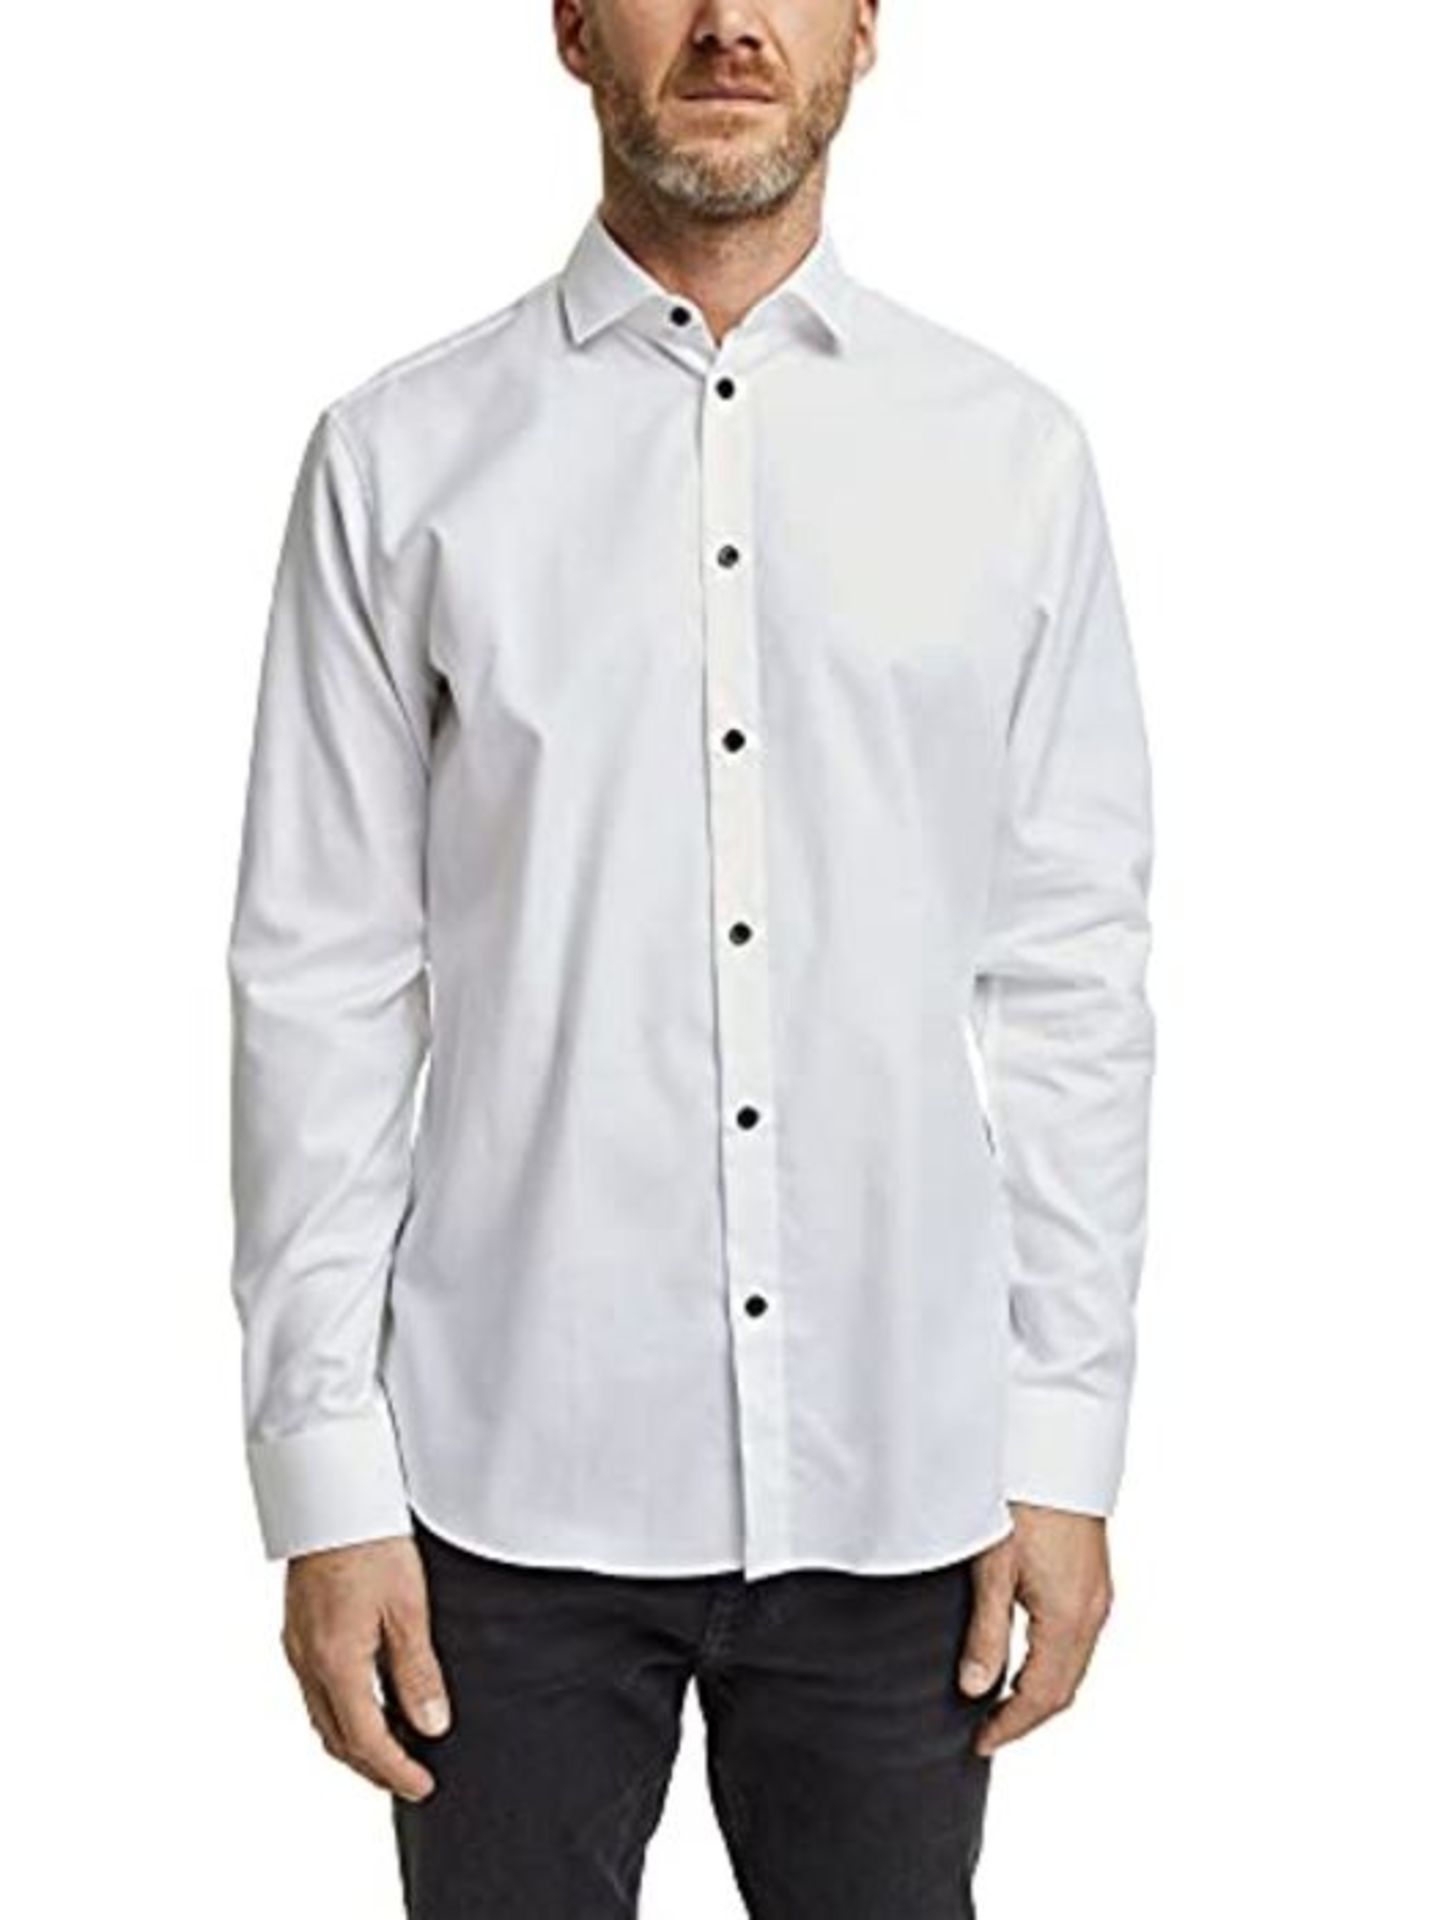 ESPRIT Collection Men's 120eo2f305 Shirt, 100/White, 36